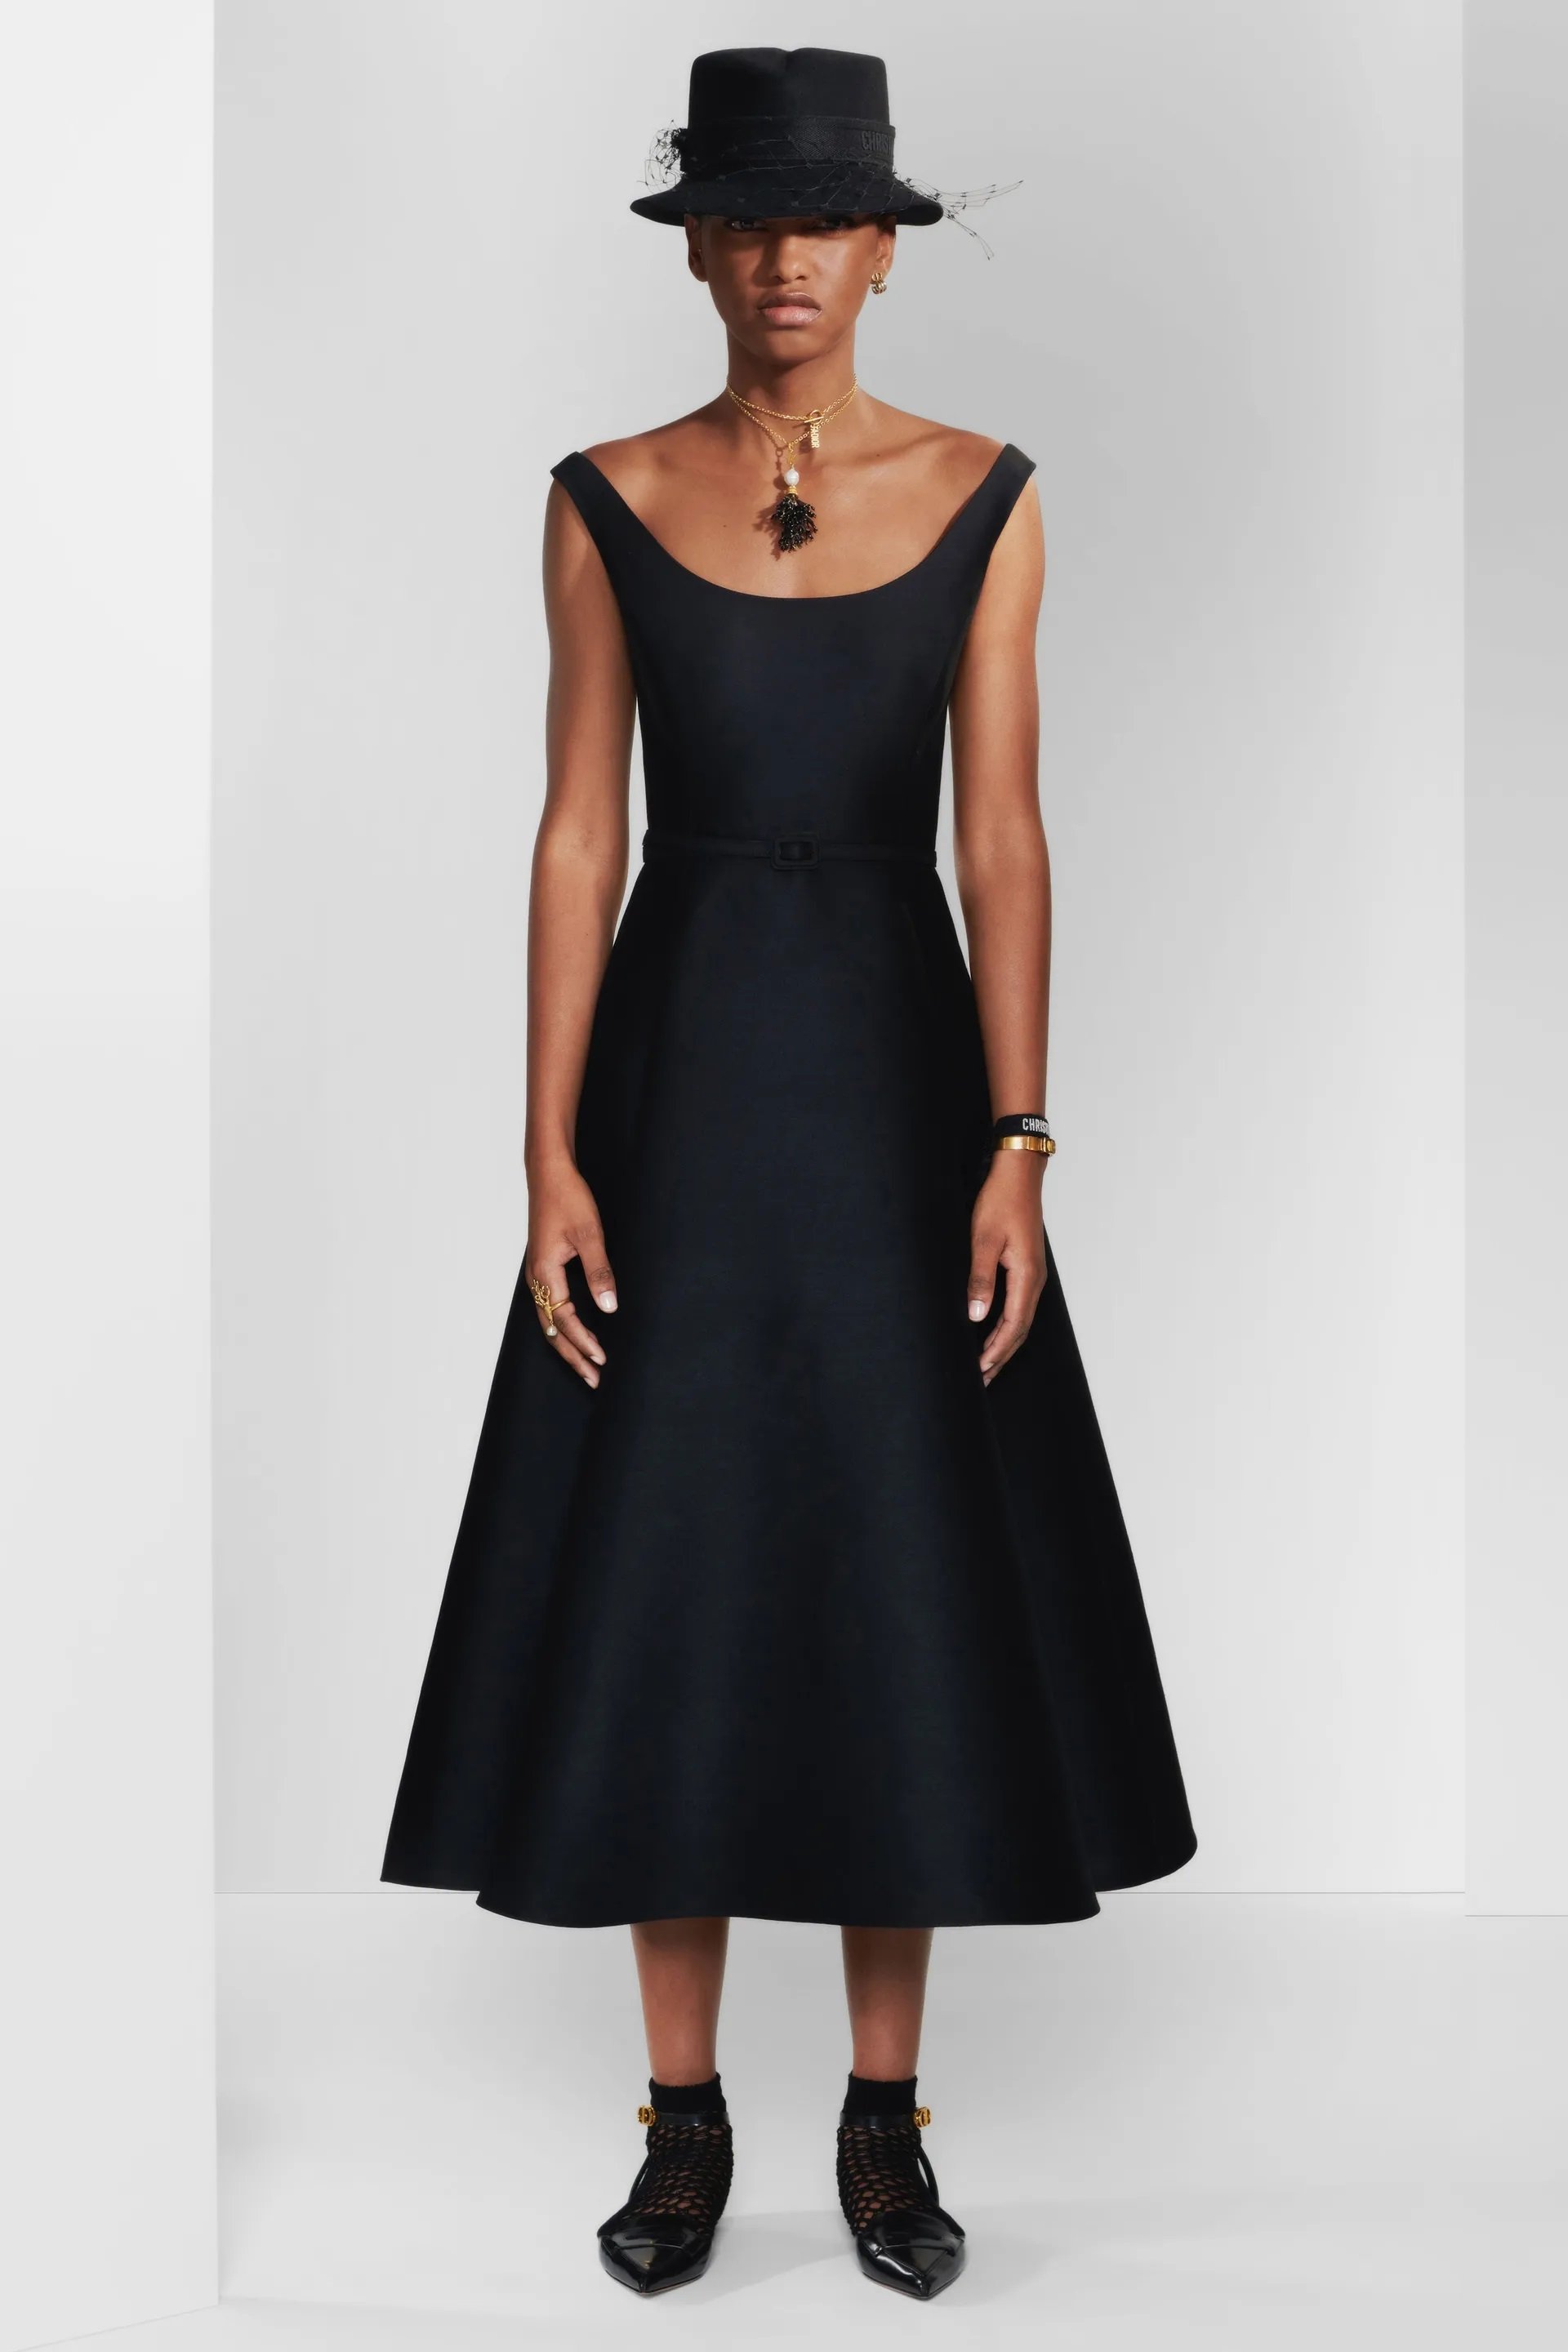 Christian Dior Silk Midi Dress in Black.jpg